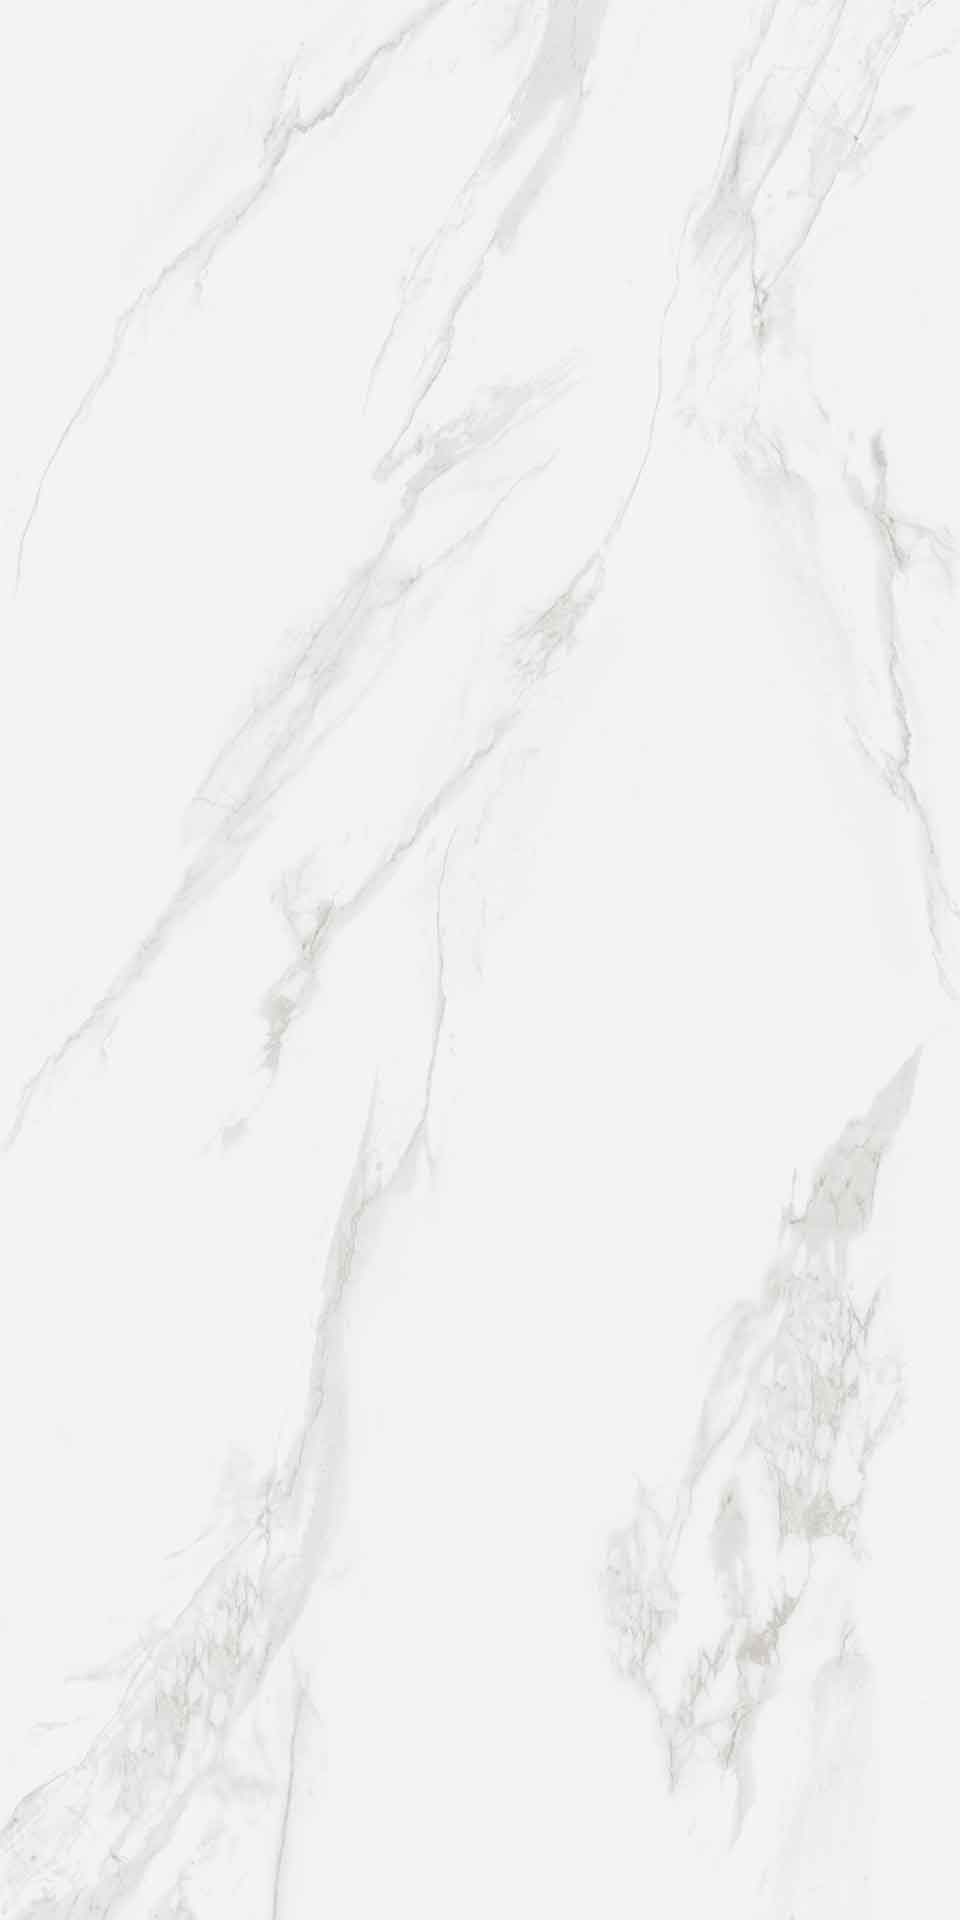 fortuna-zingara-slabs-120x260-carrara-hyper-white